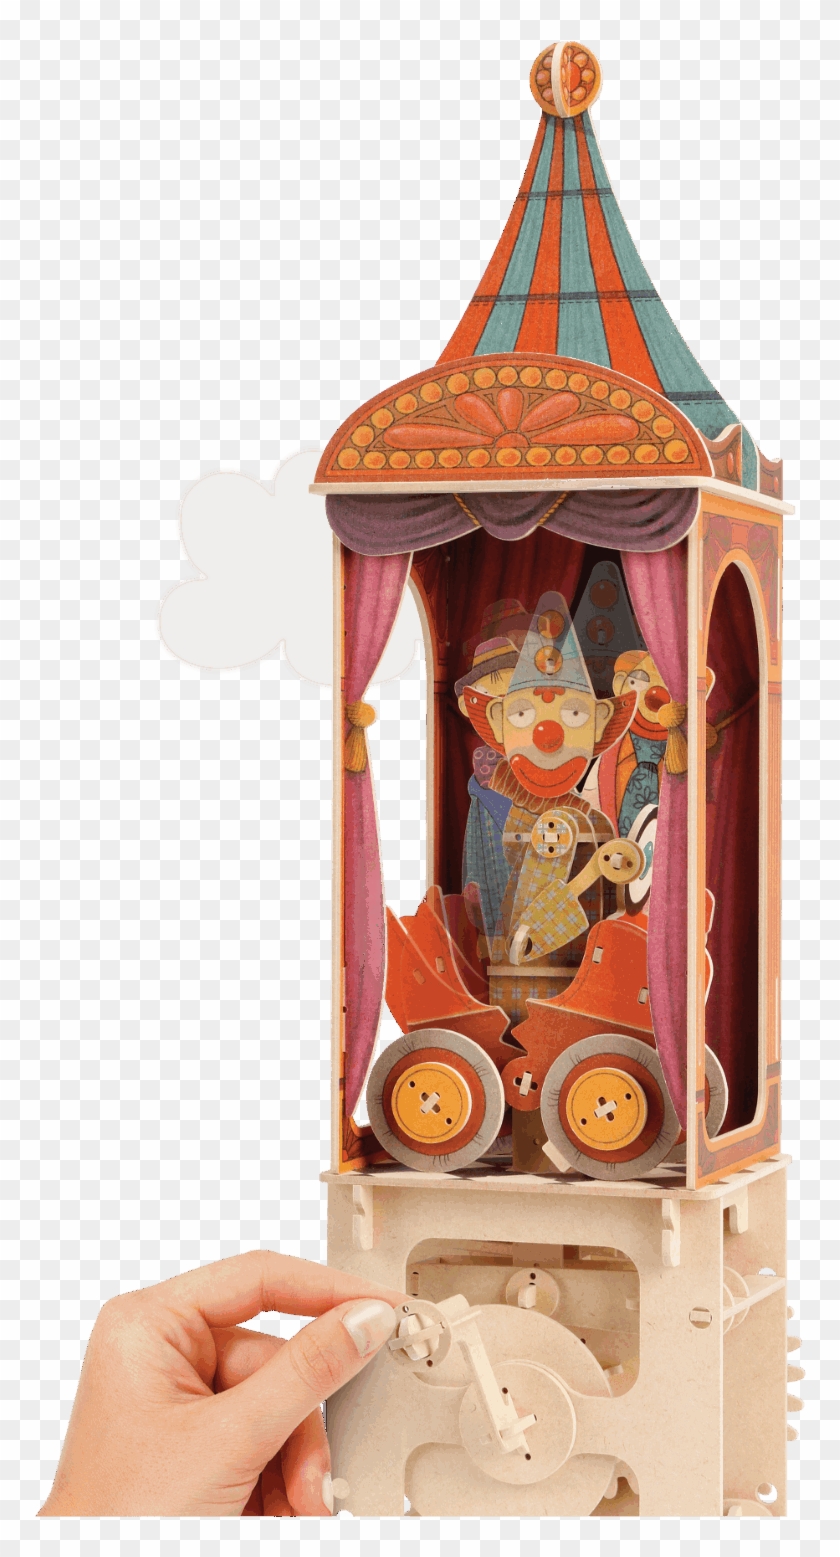 The Clown - Child Carousel Clipart #5256714